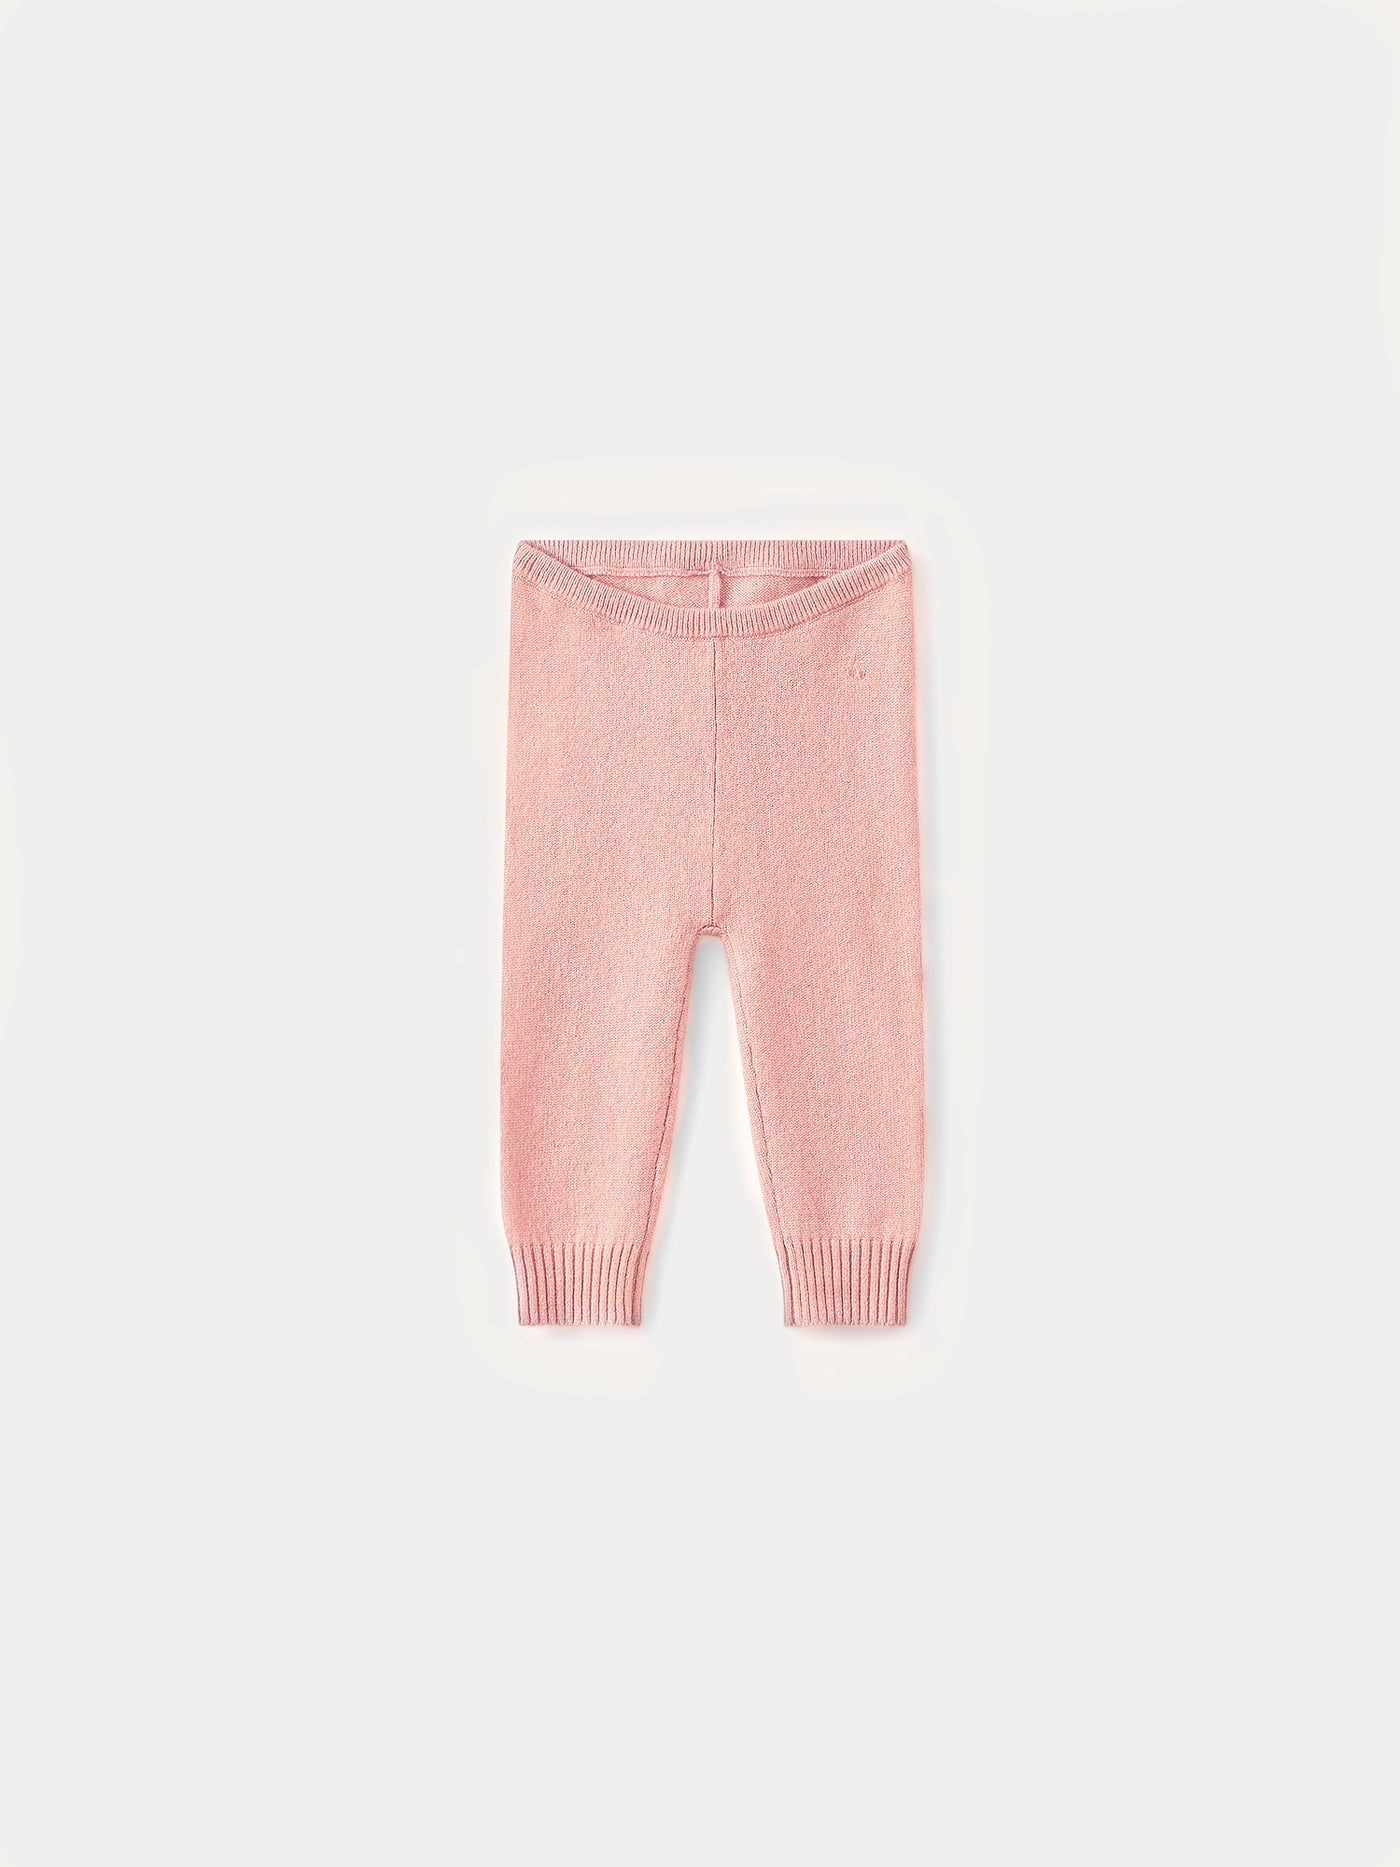 Babies' leggings faded pink